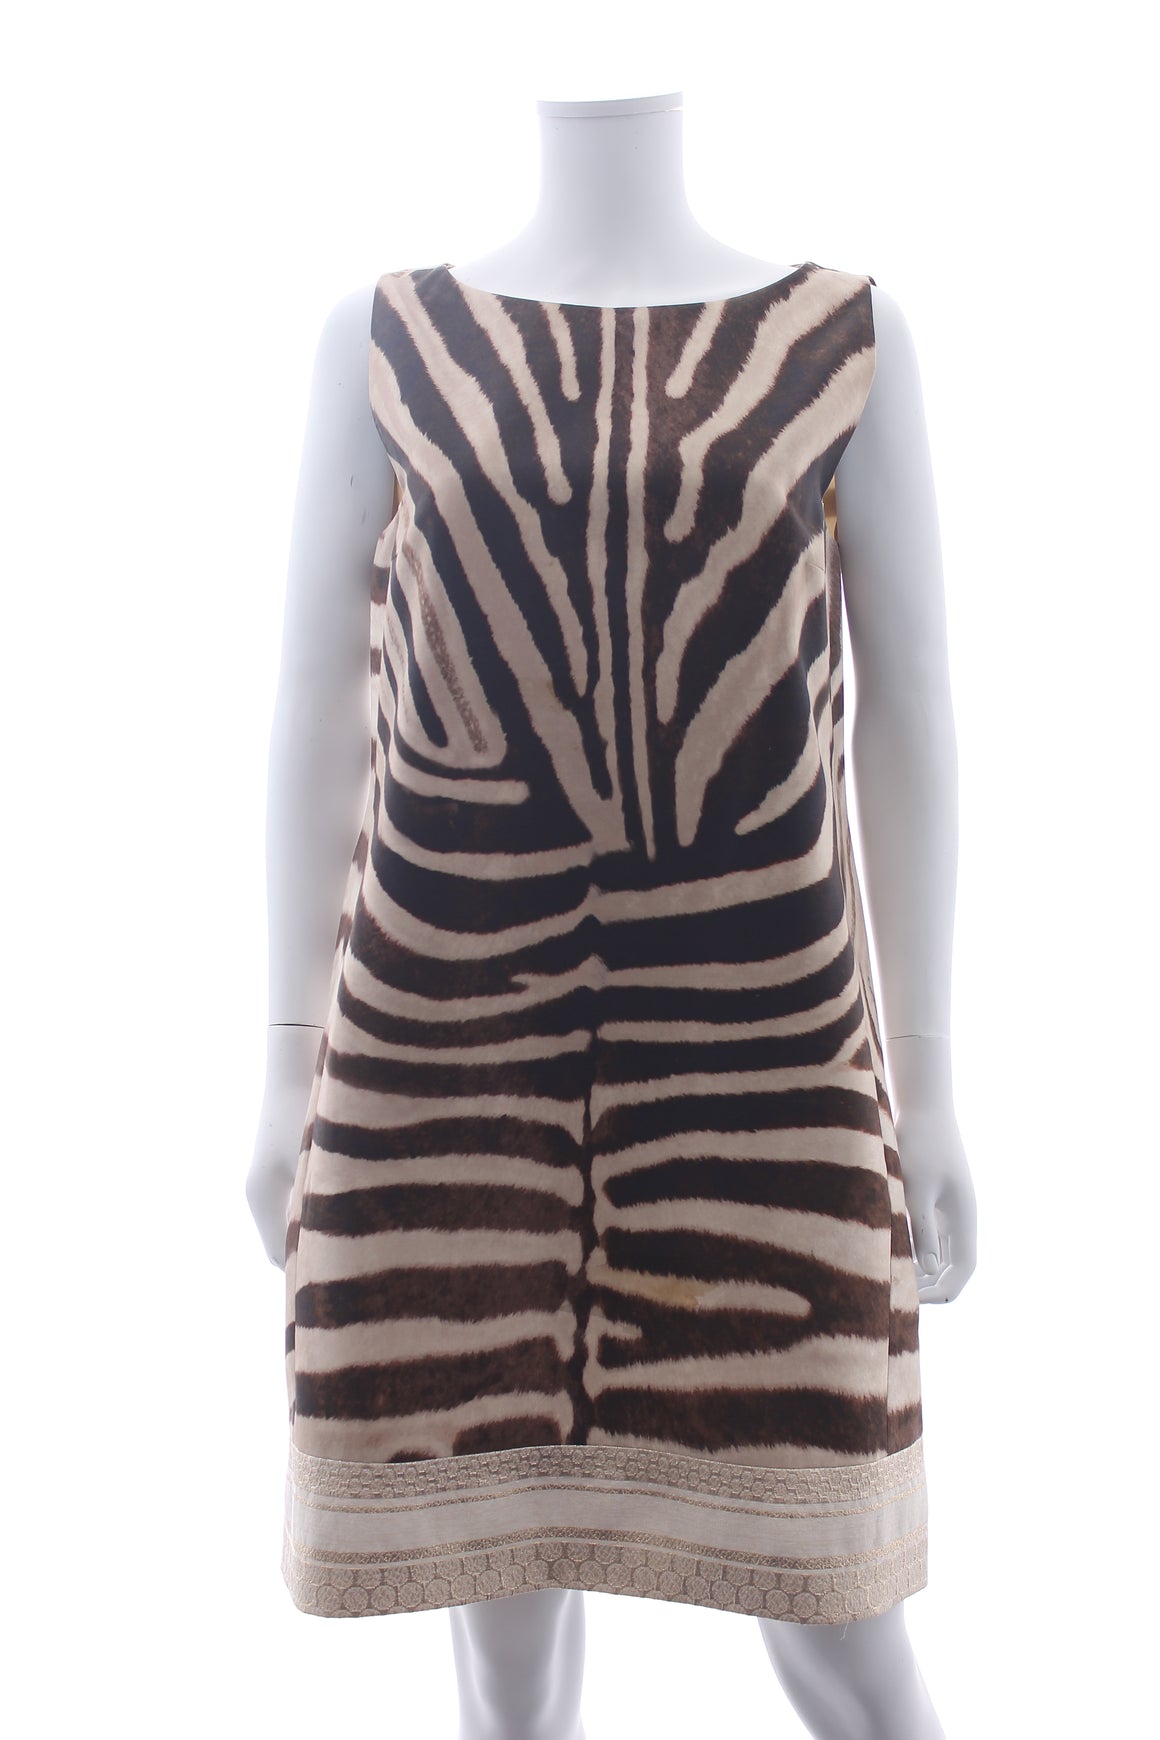 Giambattista Valli Zebra Printed Cotton and Silk-Blend Dress